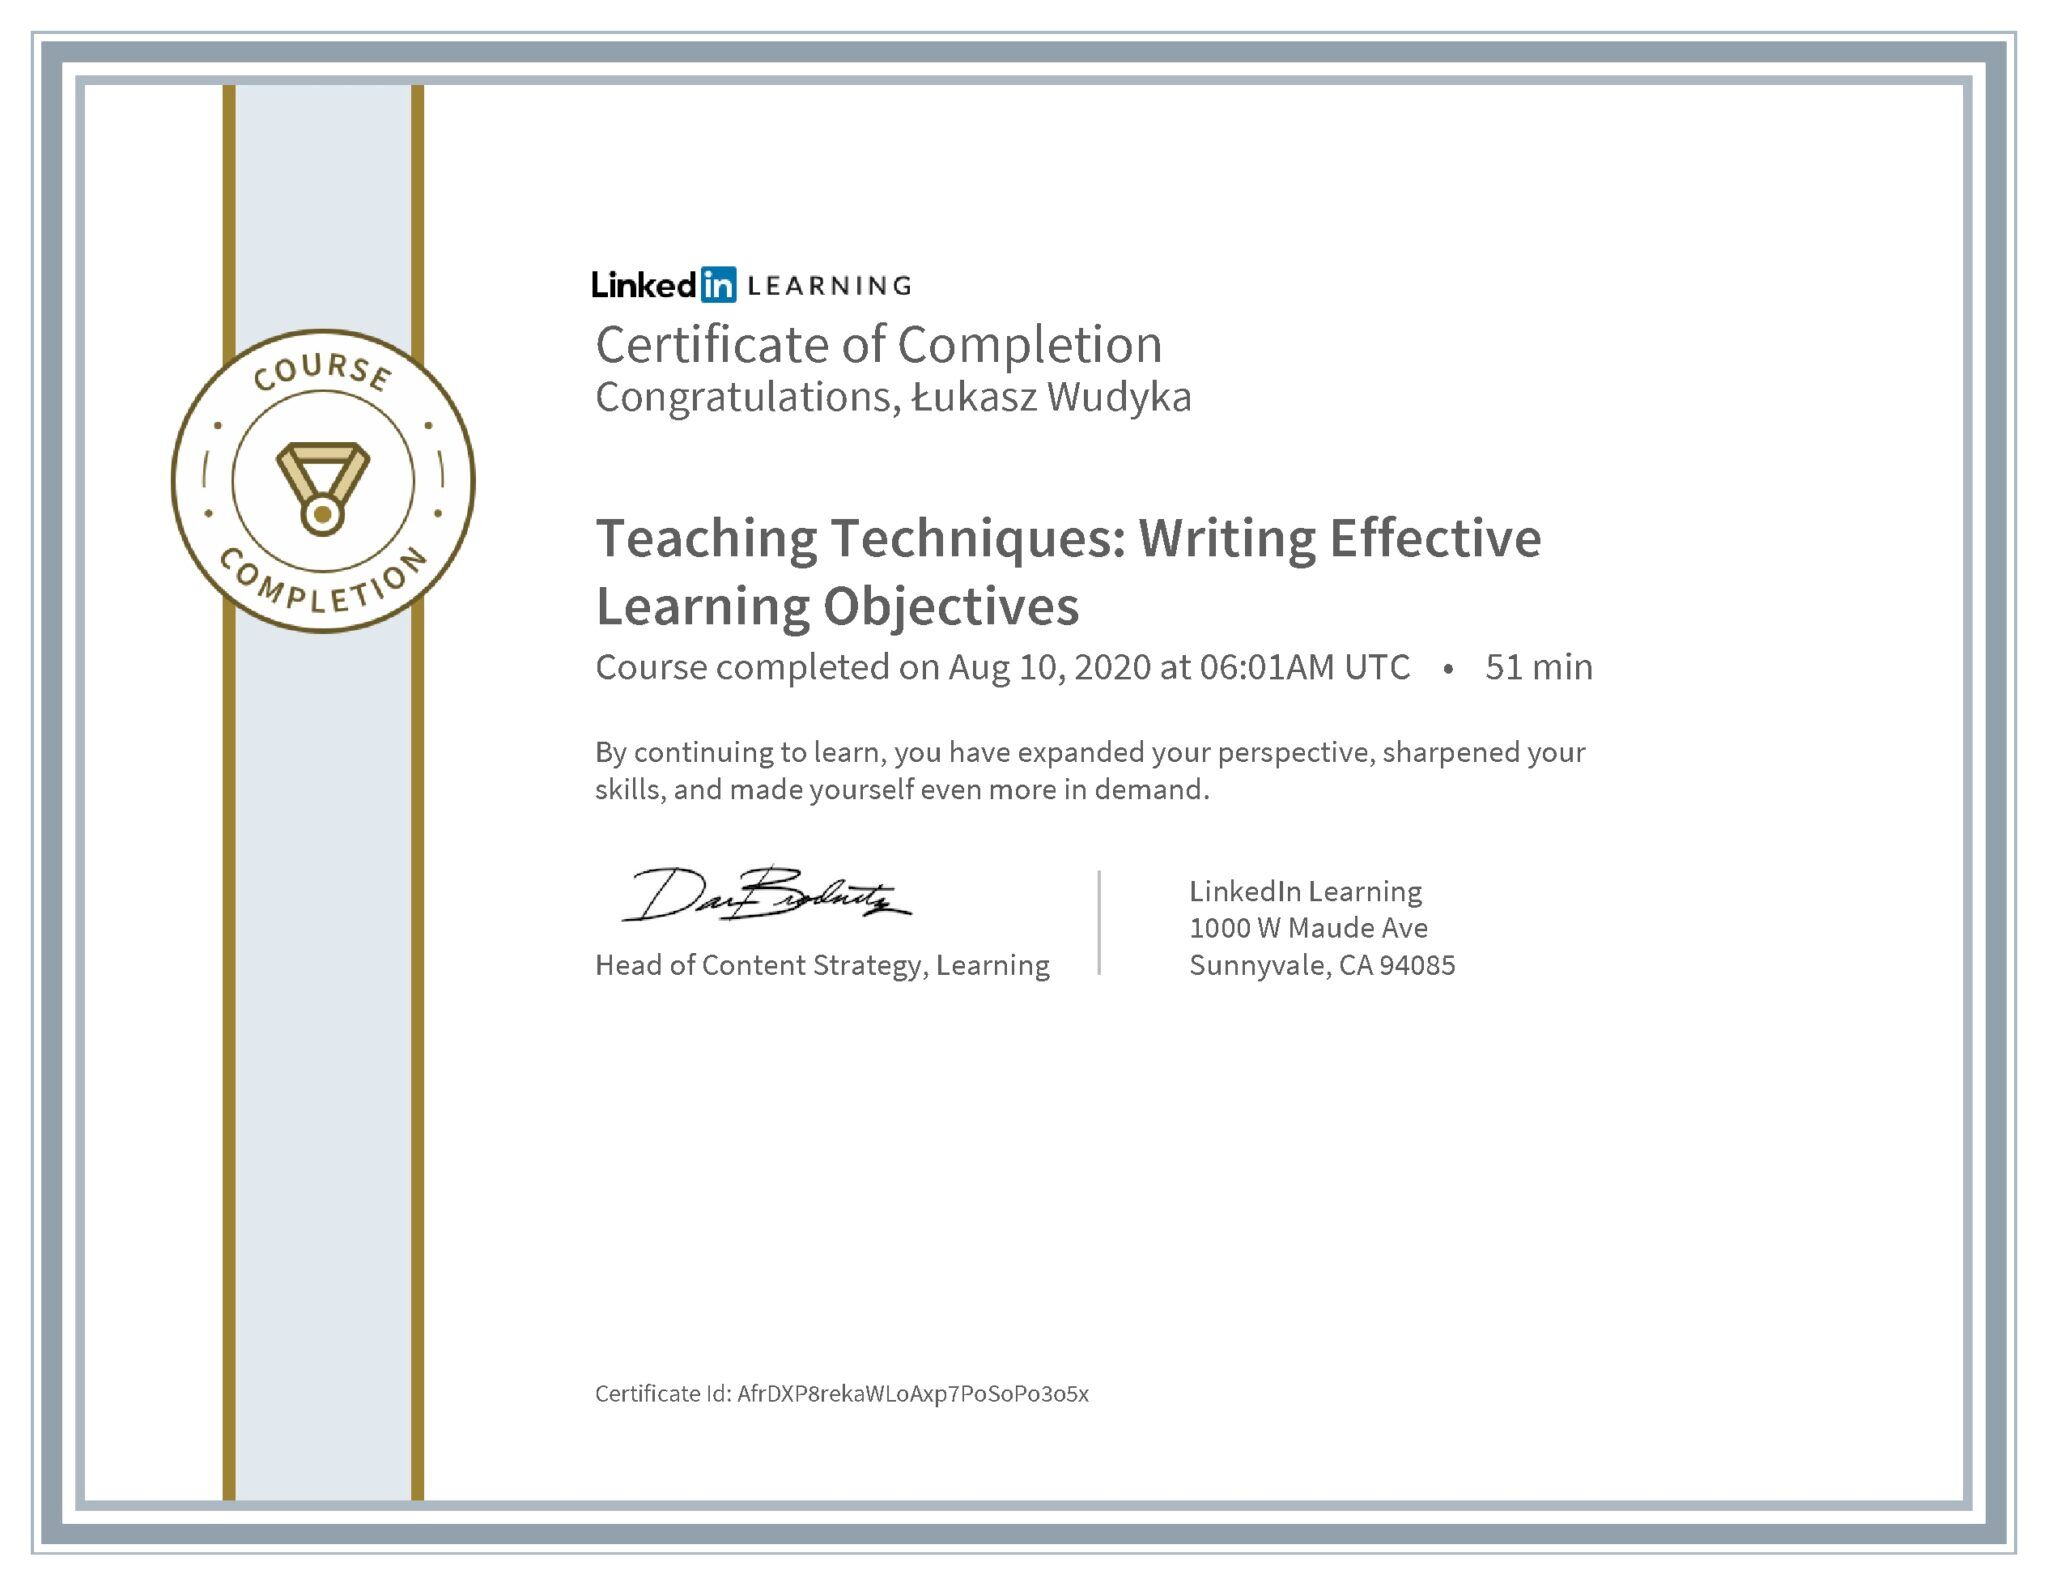 Łukasz Wudyka certyfikat LinkedIn Teaching Techniques: Writing Effective Learning Objectives